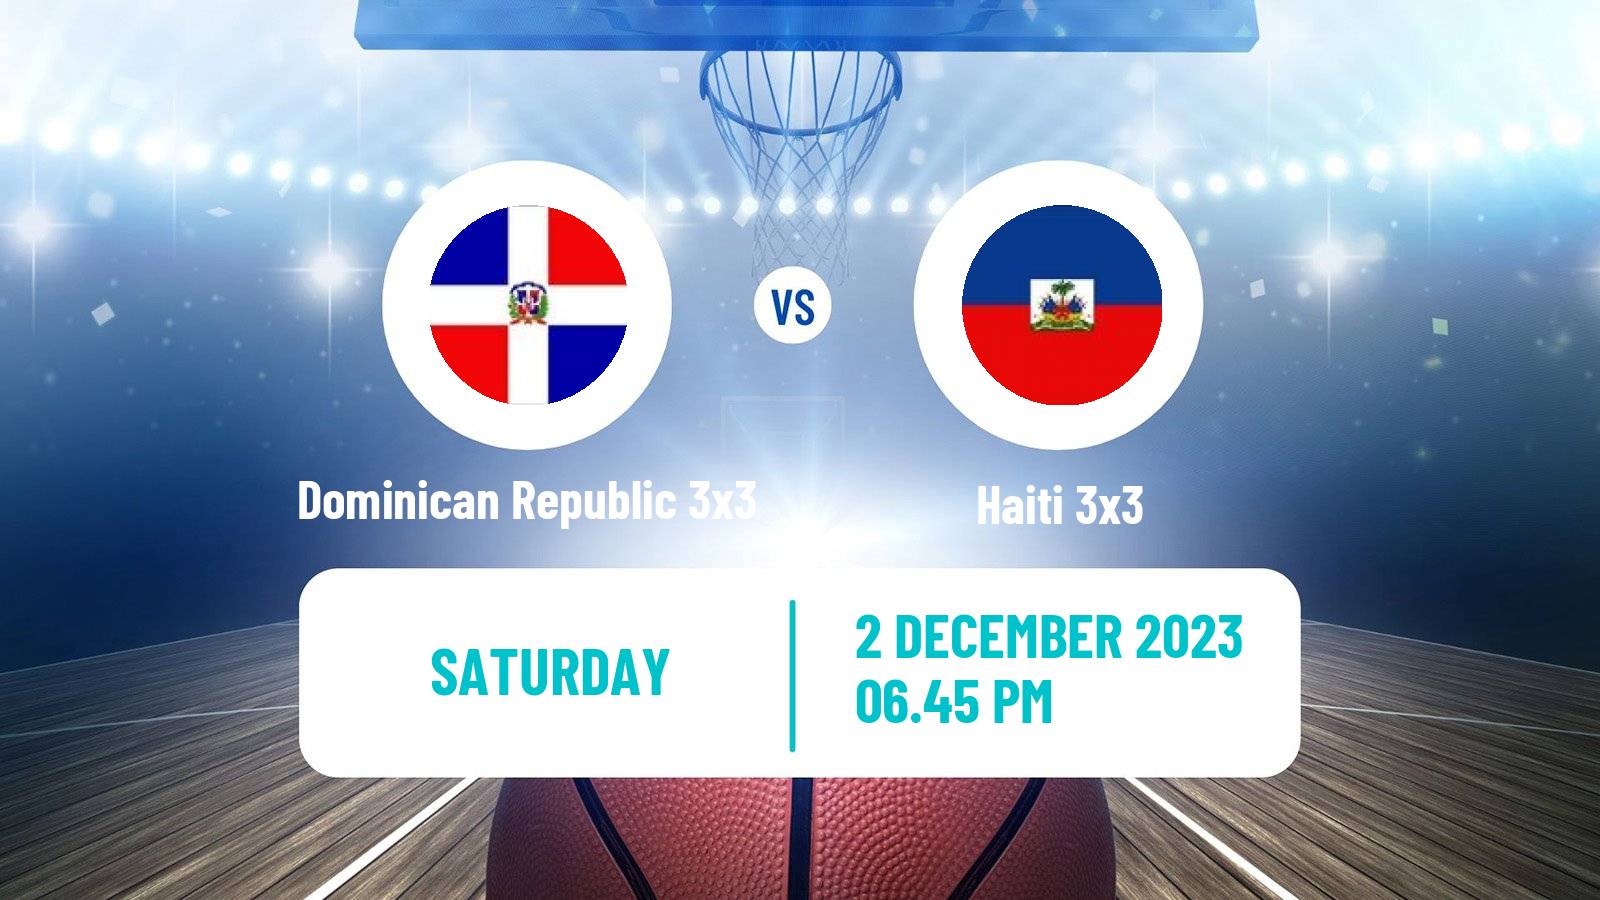 Basketball Americup 3x3 Dominican Republic 3x3 - Haiti 3x3